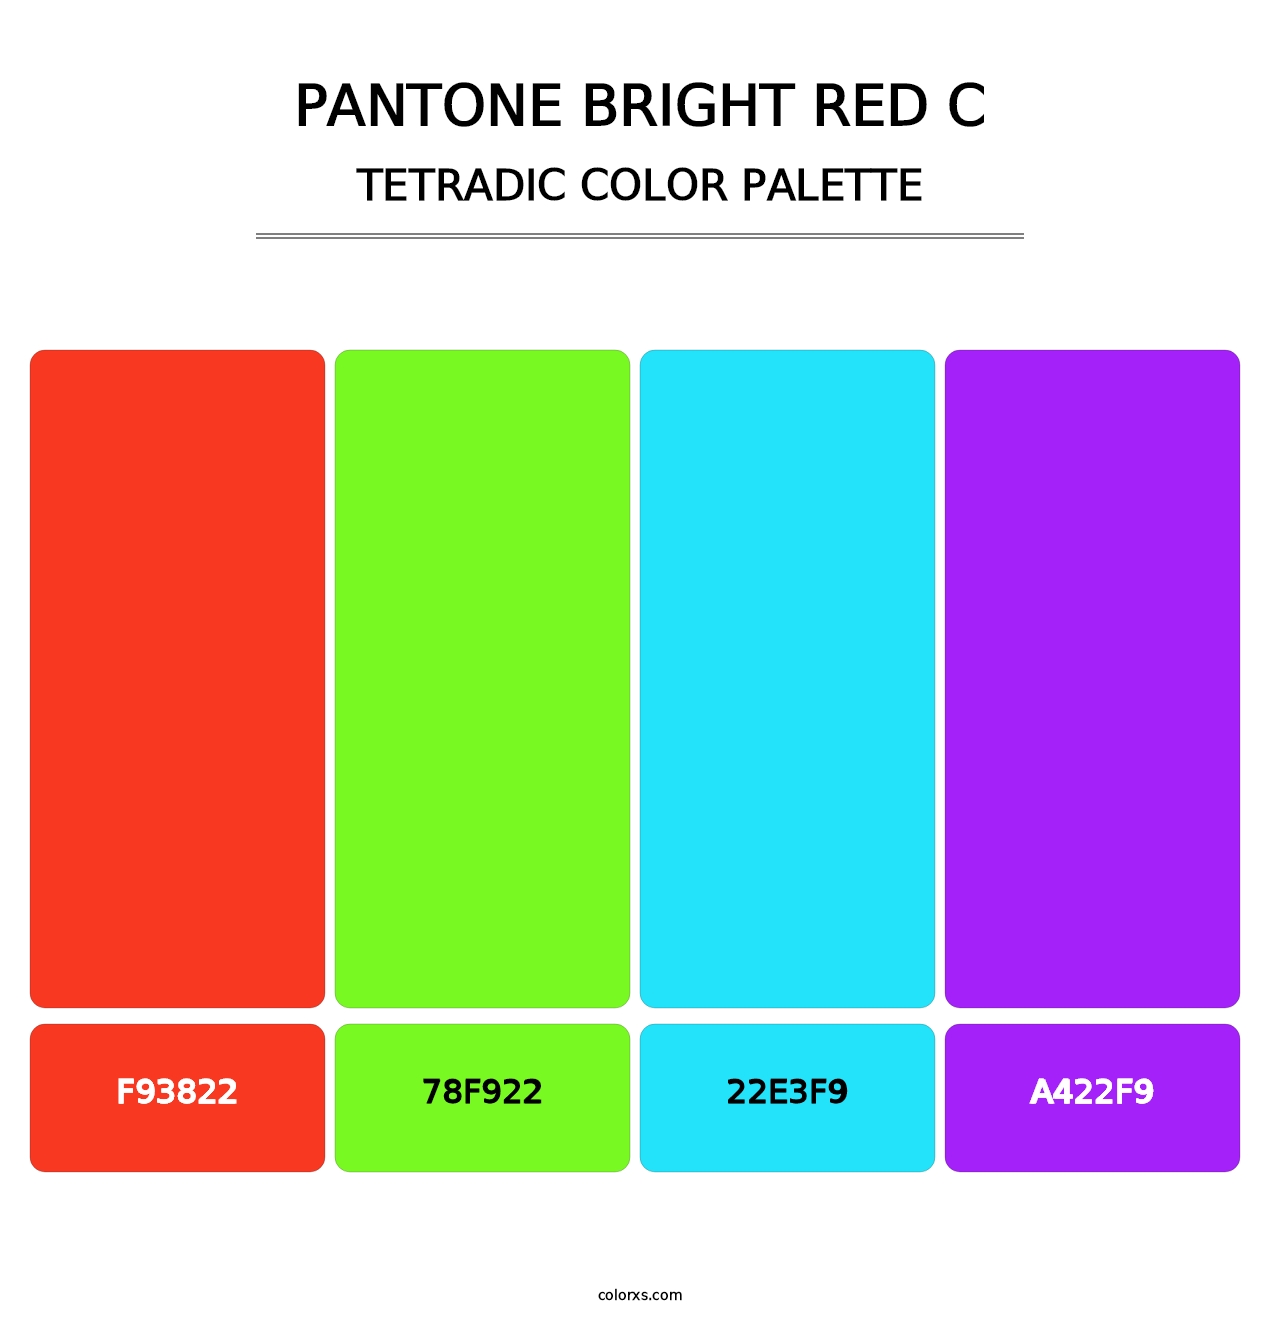 PANTONE Bright Red C - Tetradic Color Palette